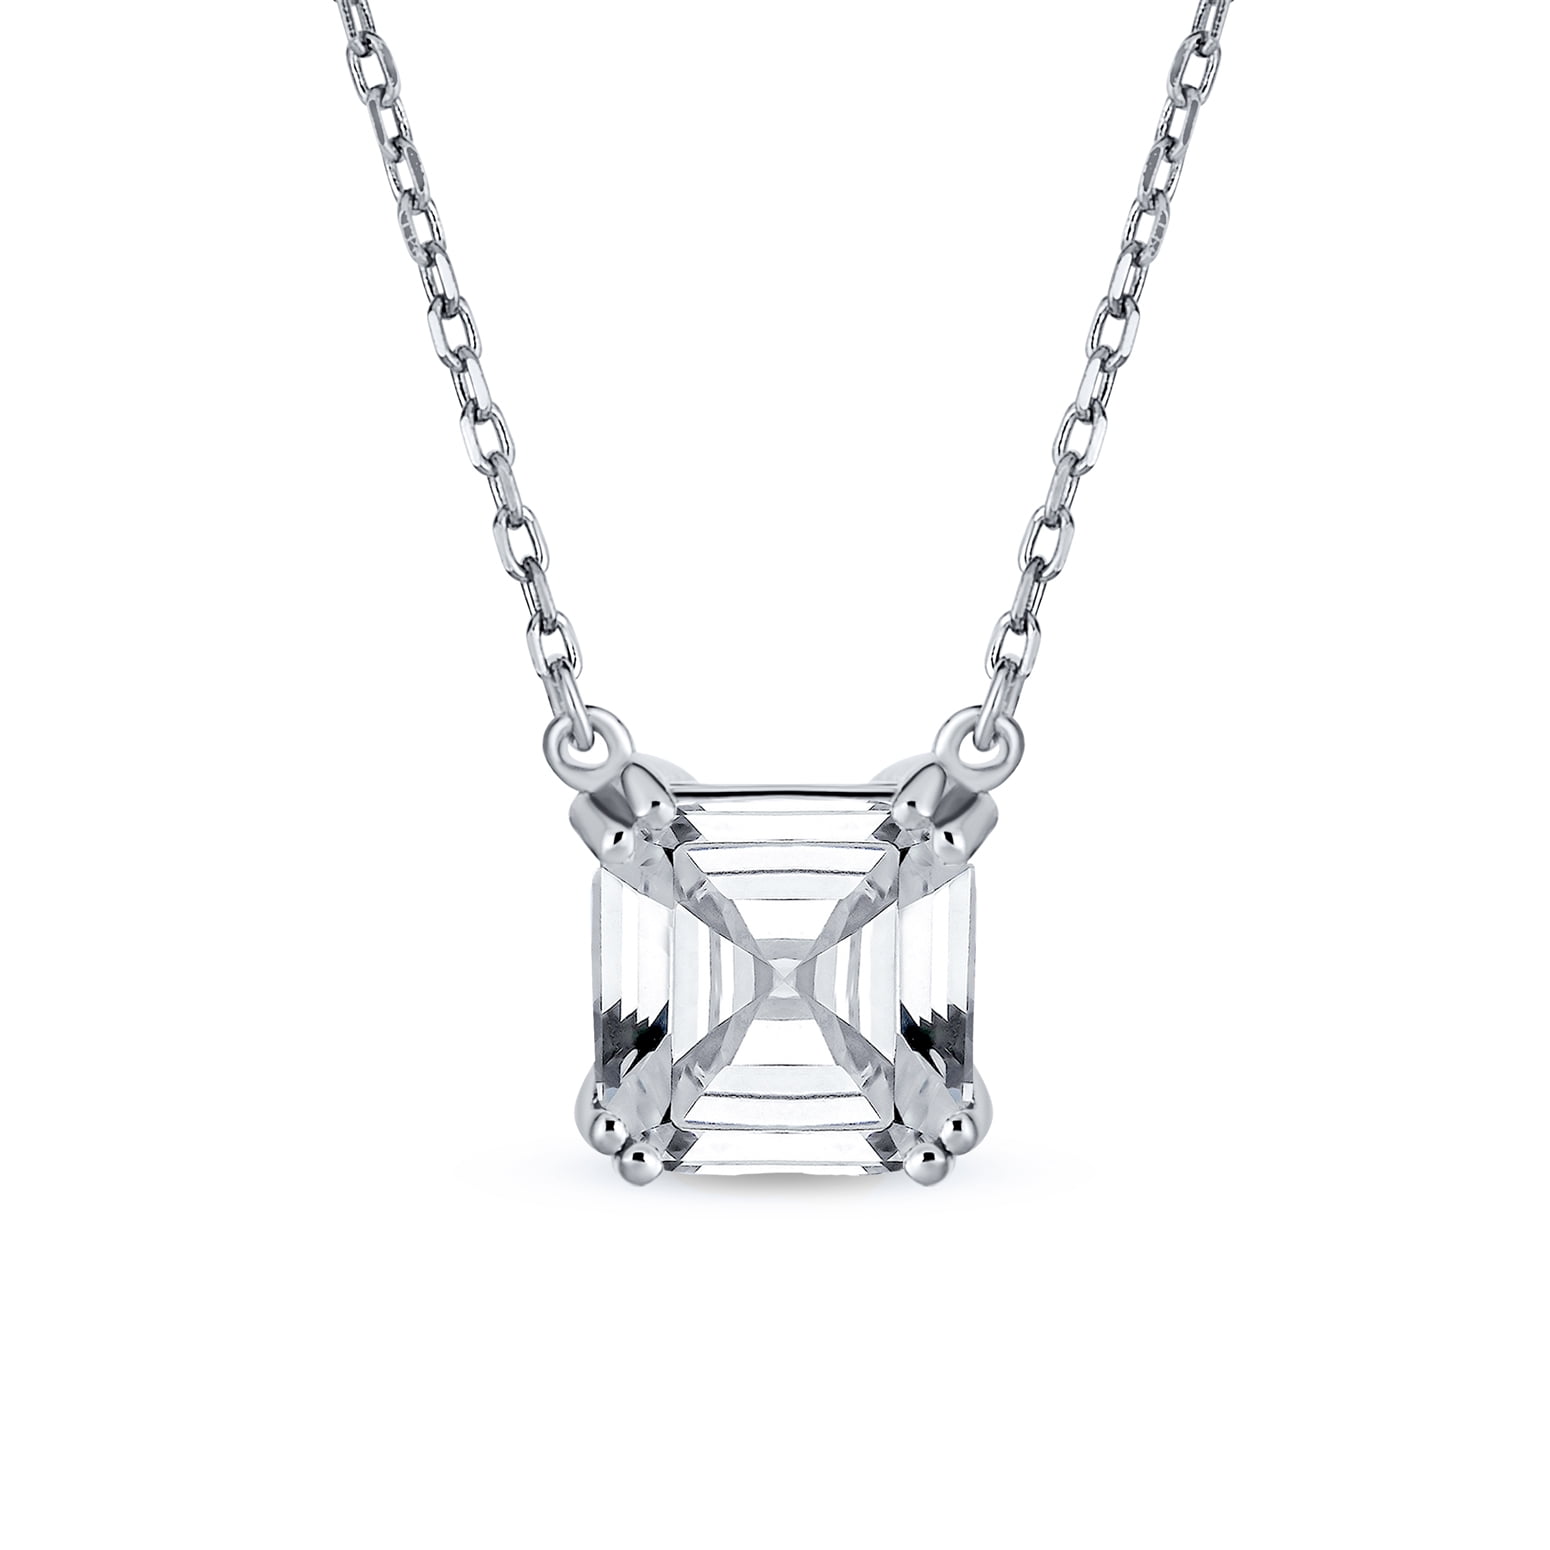 Cubic Zirconia Necklace Pendant Chain Crystal Diamante Gift Women Girlfridend 